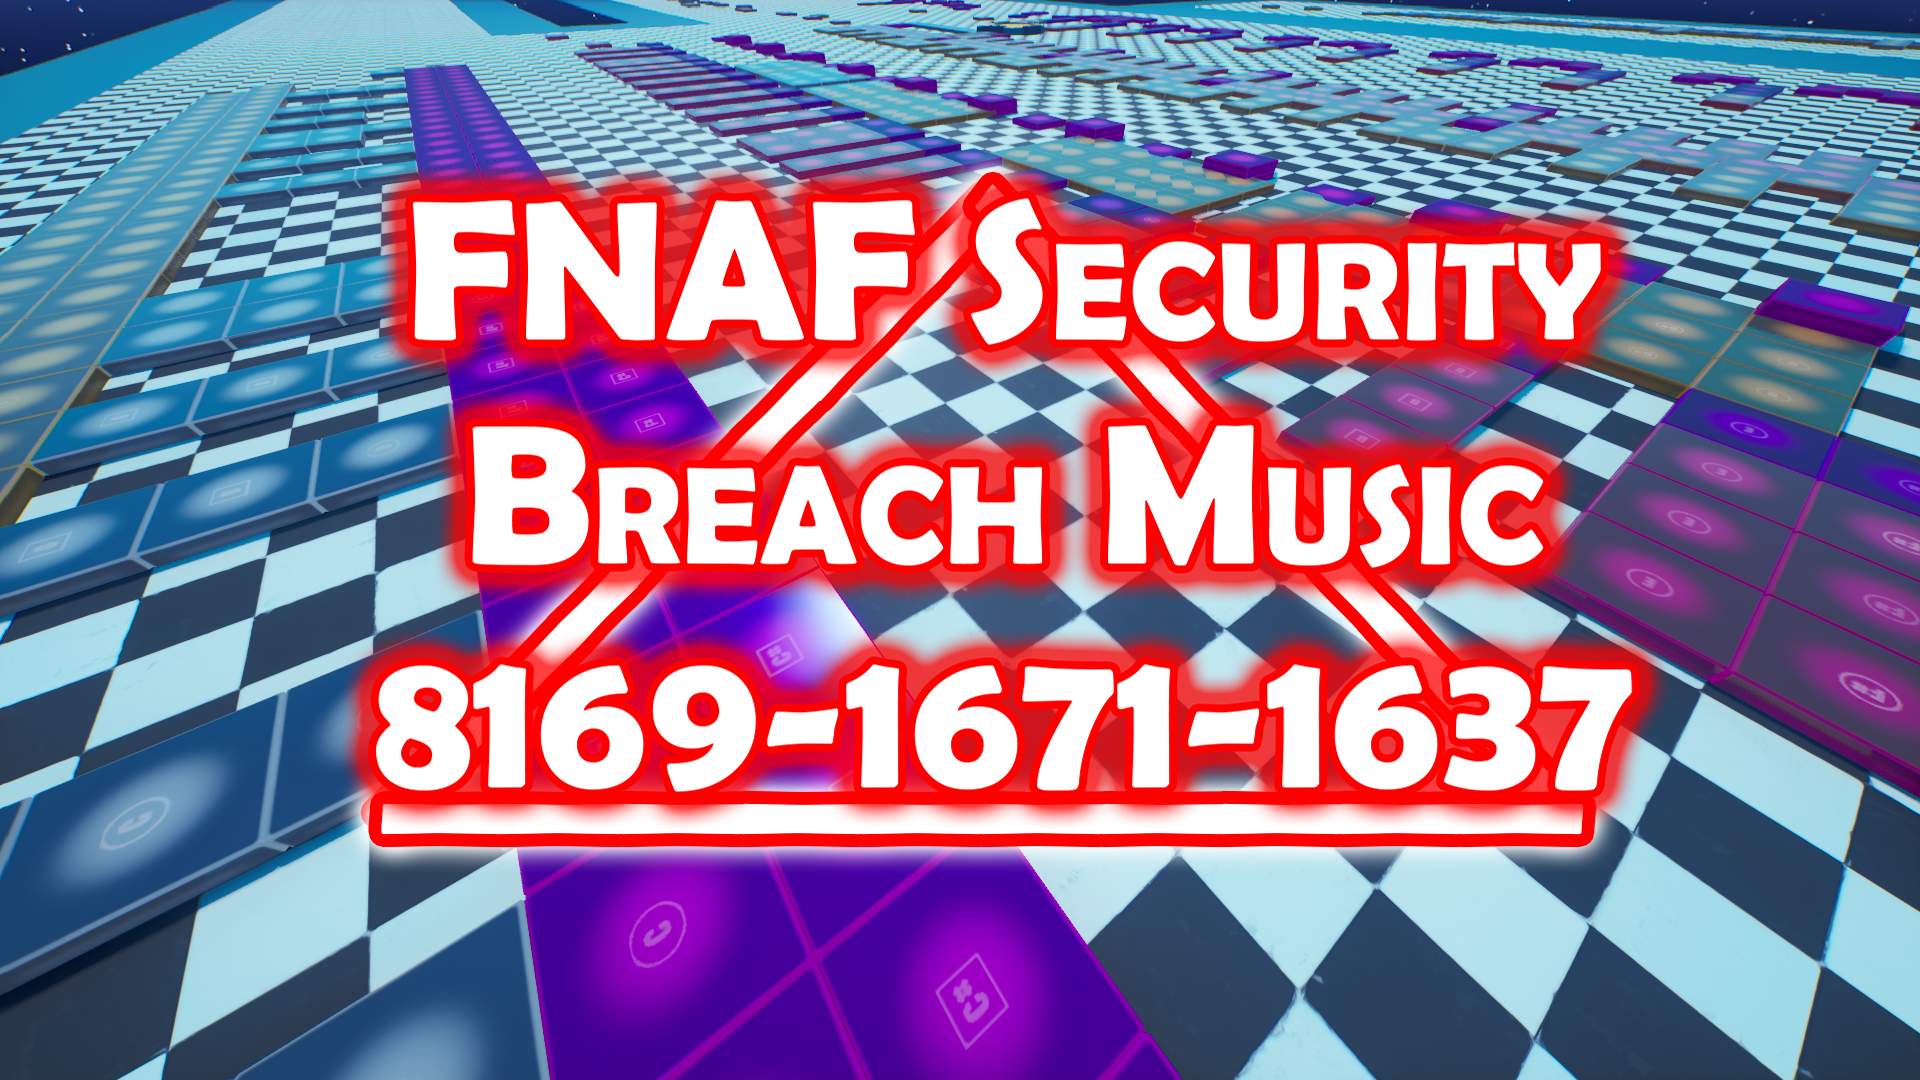 FNAF SECURITY BREACH MUSIC - Fortnite Creative Map Code - Dropnite